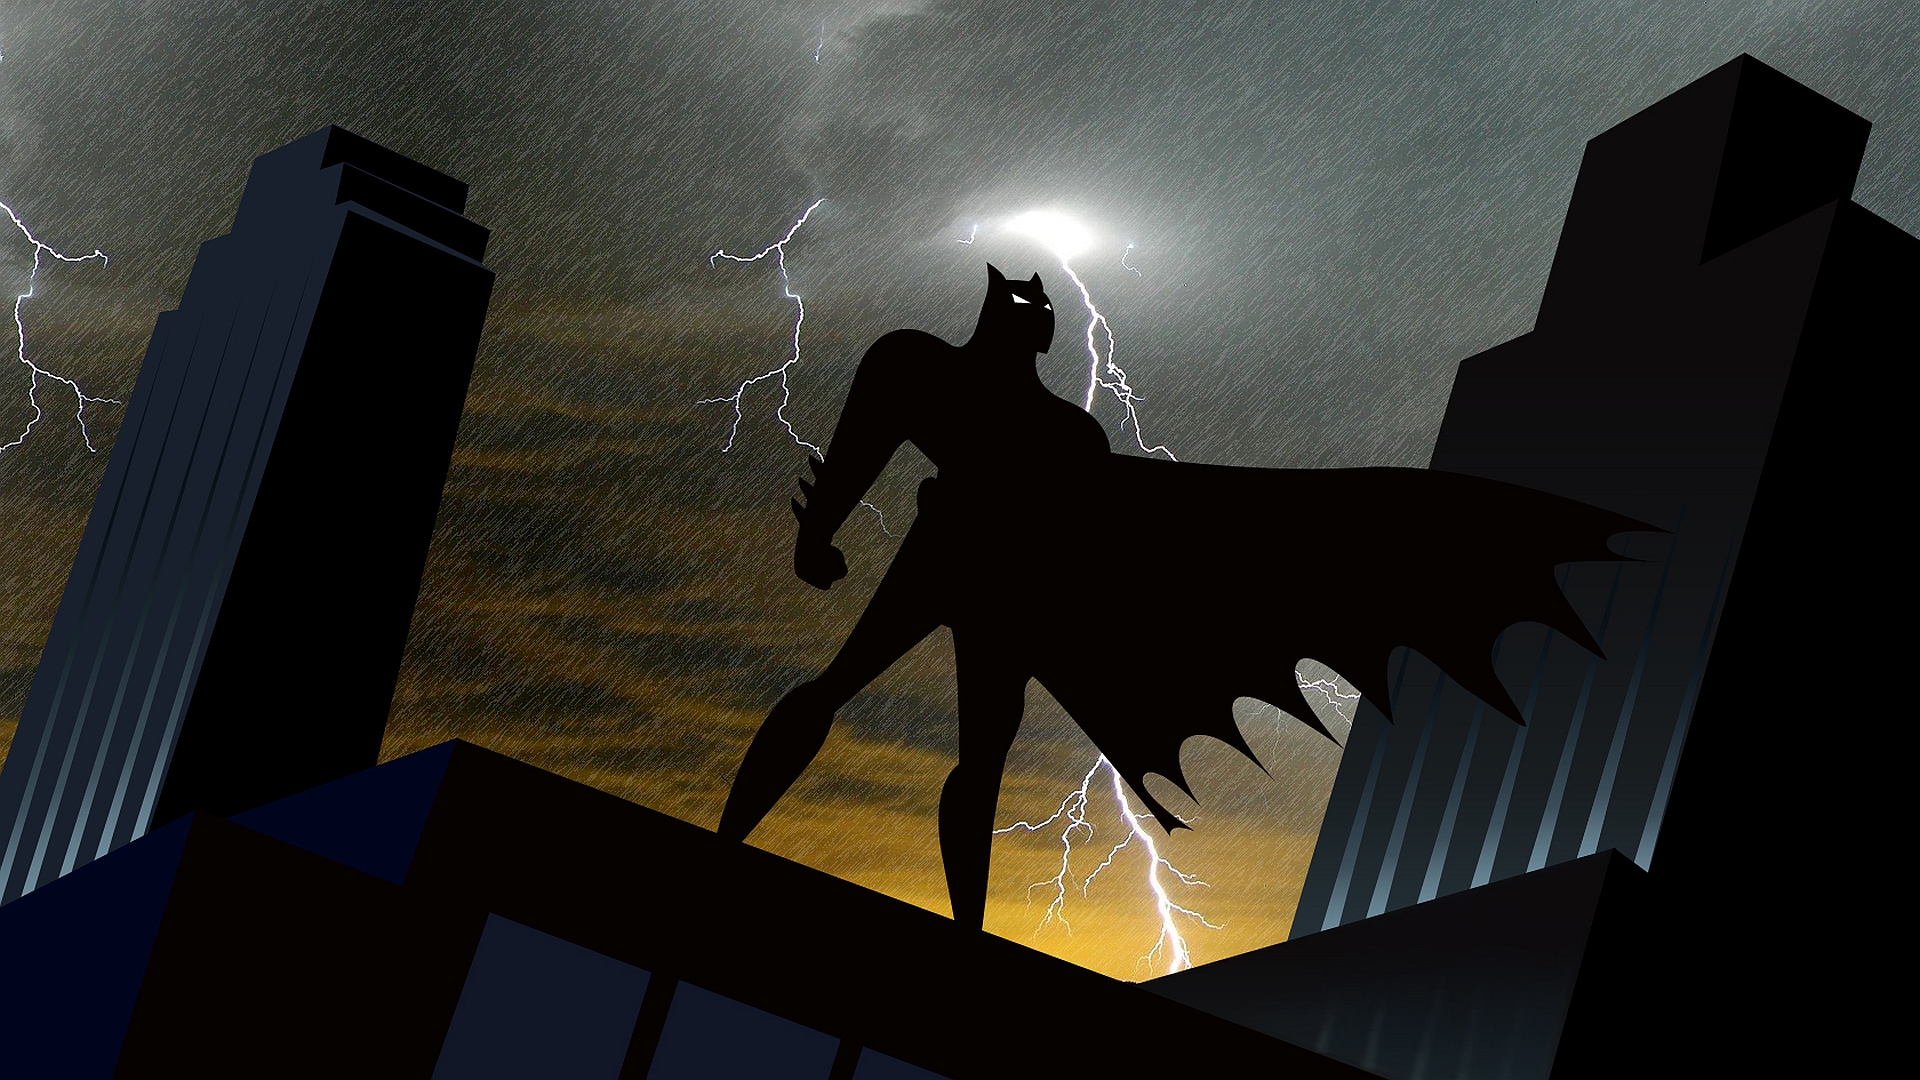 Batman The Animated Series Wallpaper